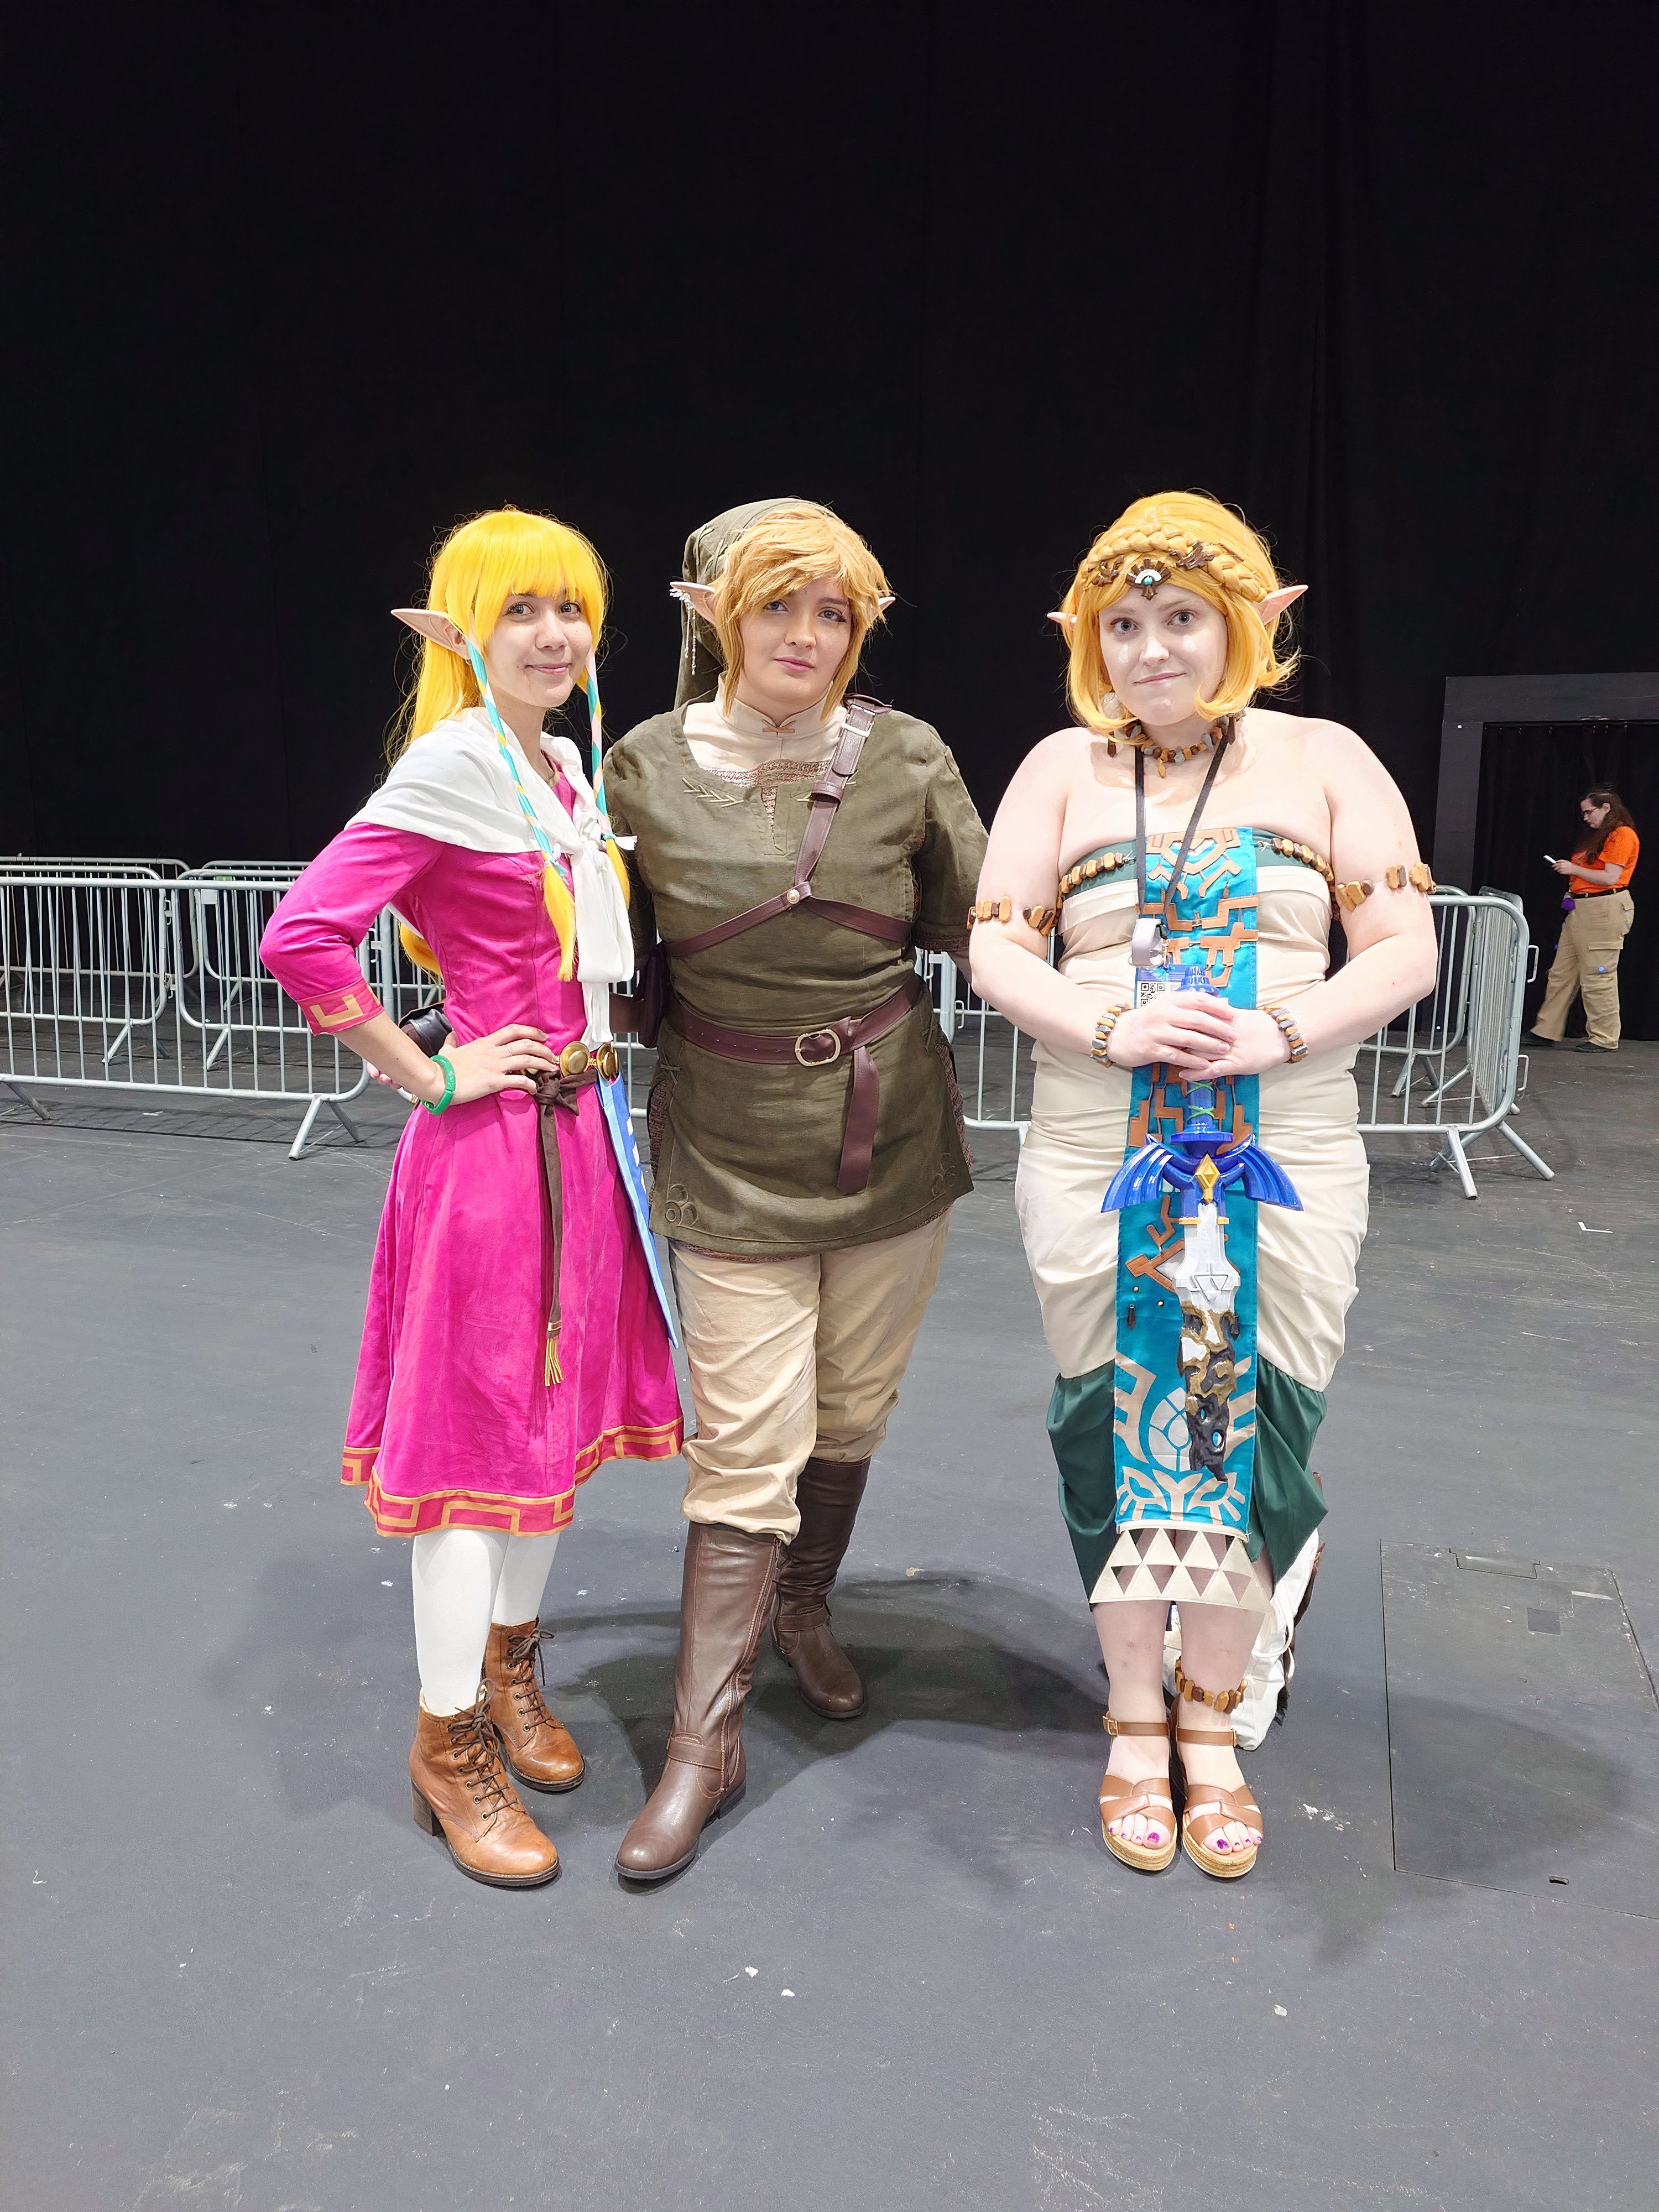 Makahiia as Zelda (Skyward Sword), unlimitedvoidboi as Link, and Lottsofrandom92 as Zelda (TOTK)